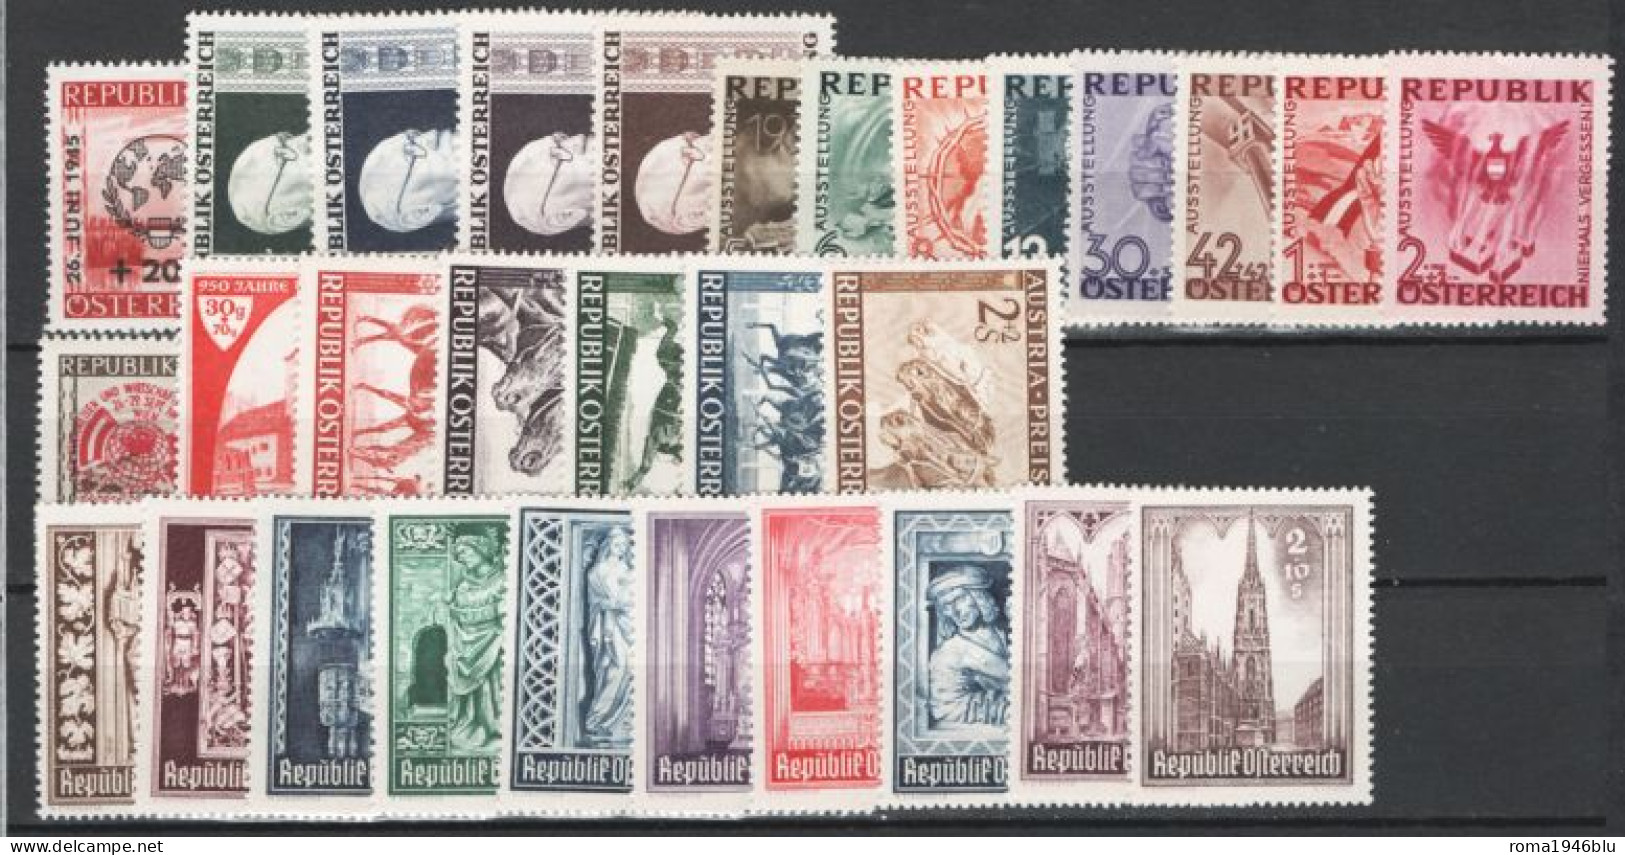 Austria 1946 Annata Completa / Complete Year Set **/MNH VF - Full Years